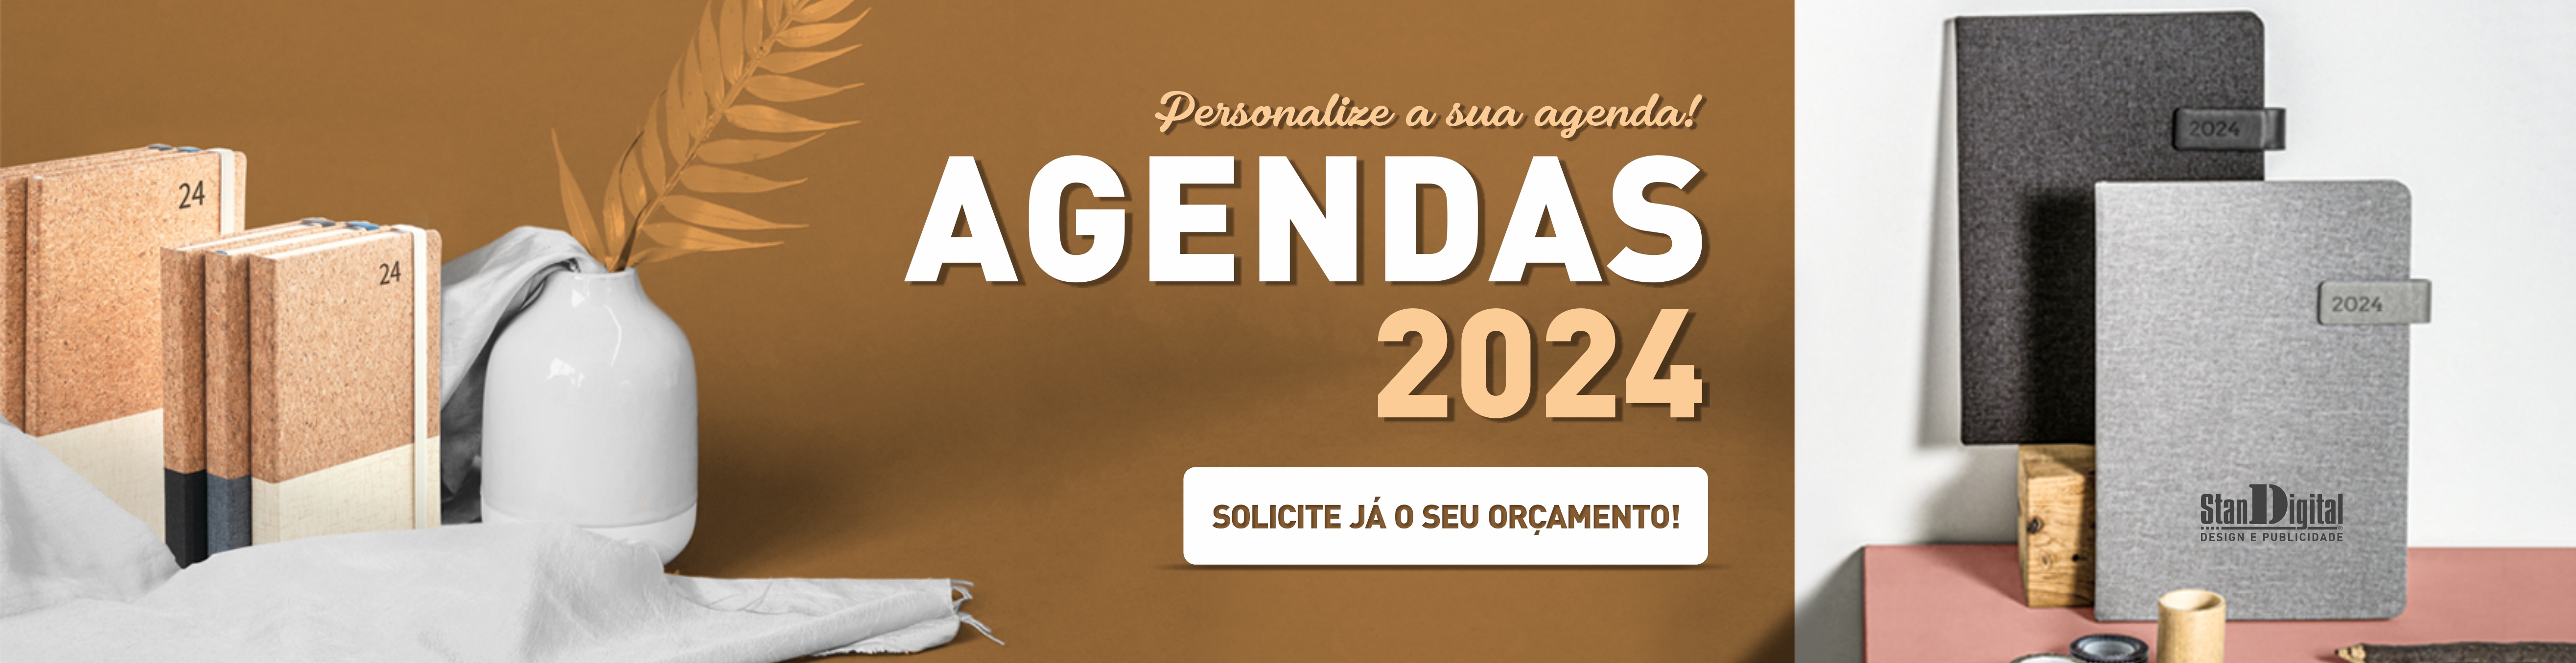 Agendas 2024 Banner Facebook